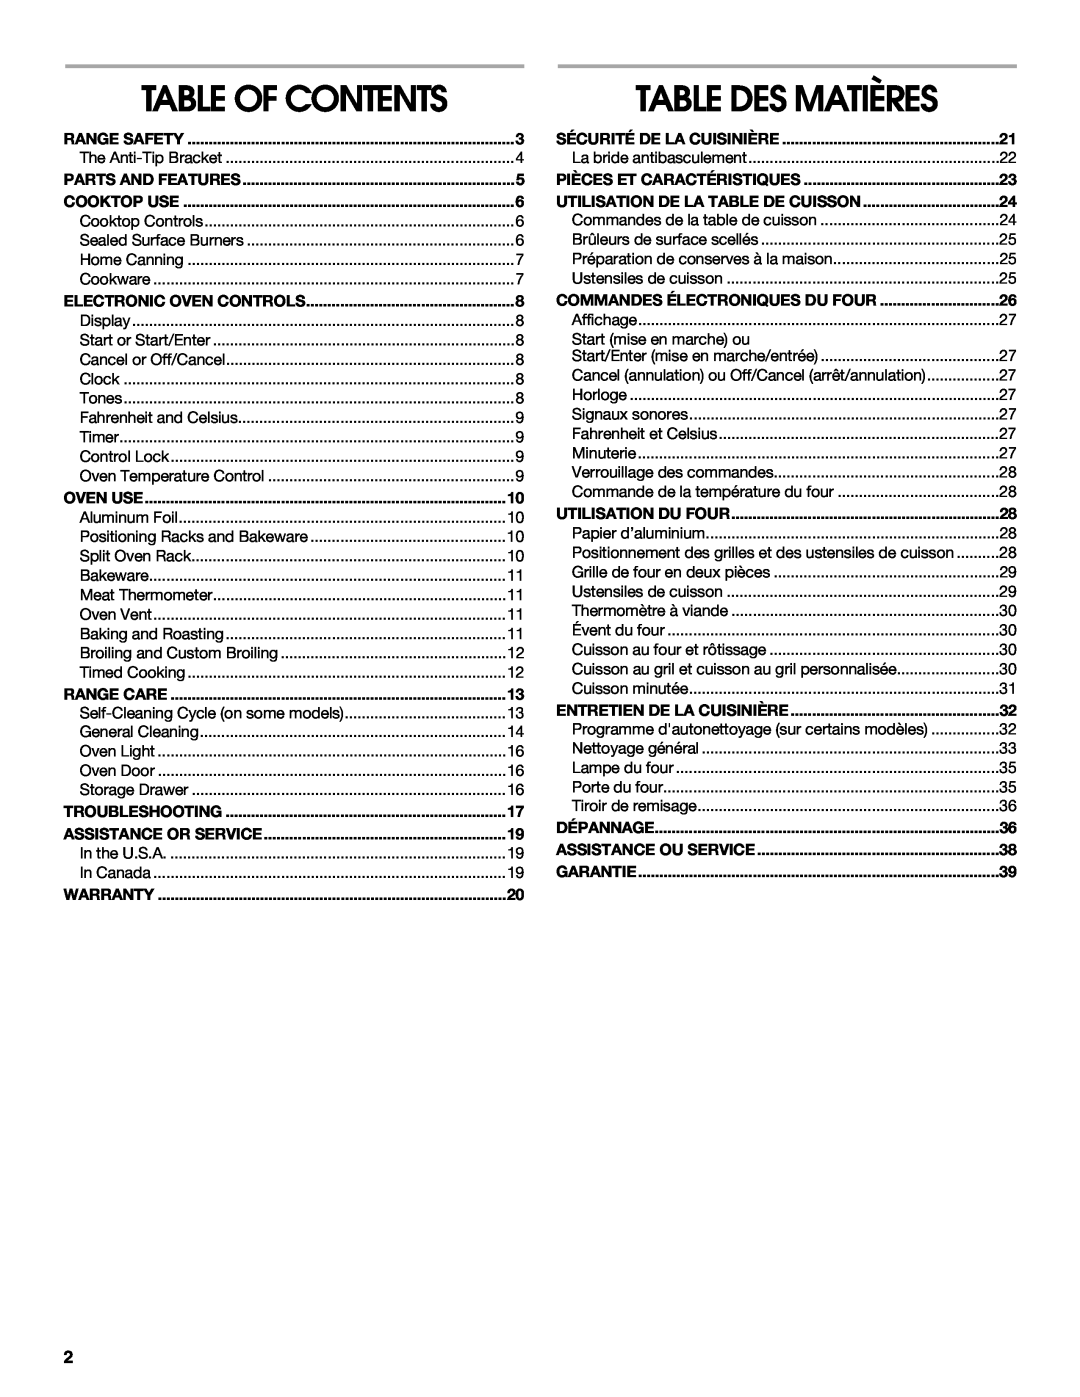 IKEA Range manual Table Des Matières, Table Of Contents 